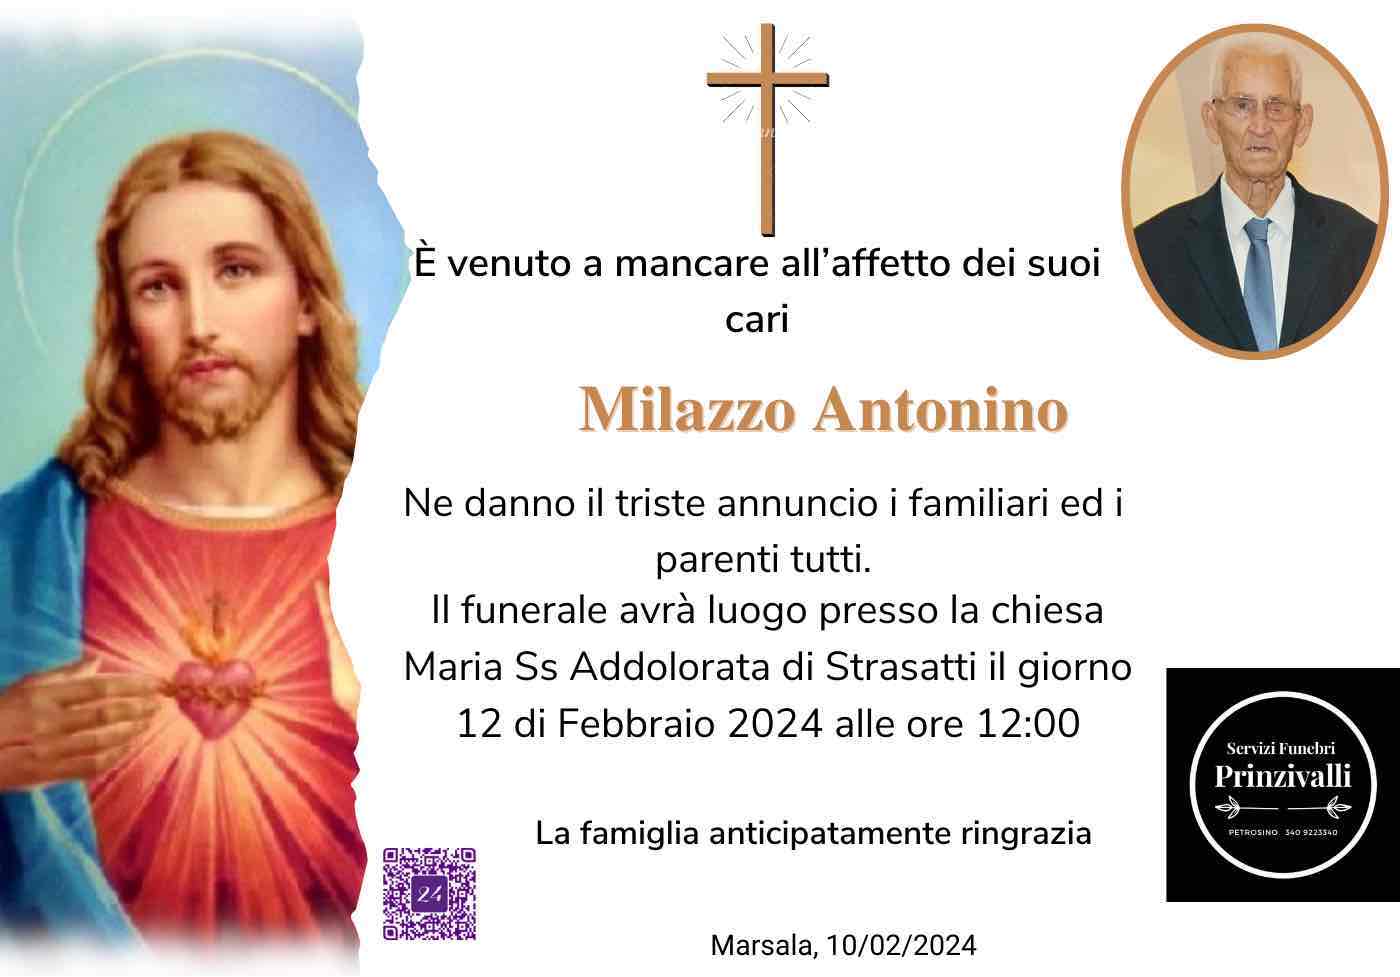 Antonino Milazzo